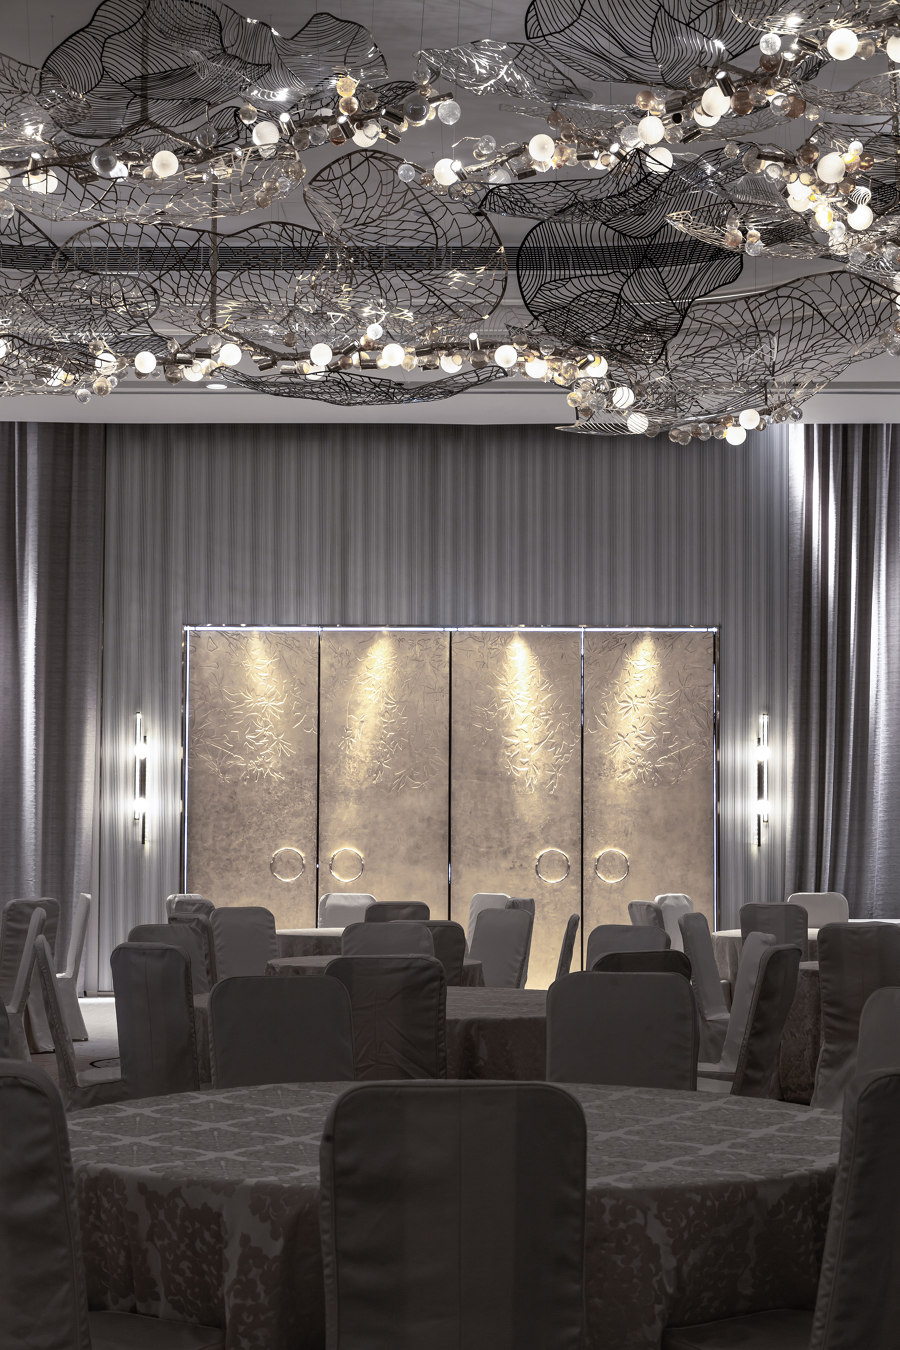 Nina Ballroom & Nina Bridal Suite de CL3 | Diseño de hoteles